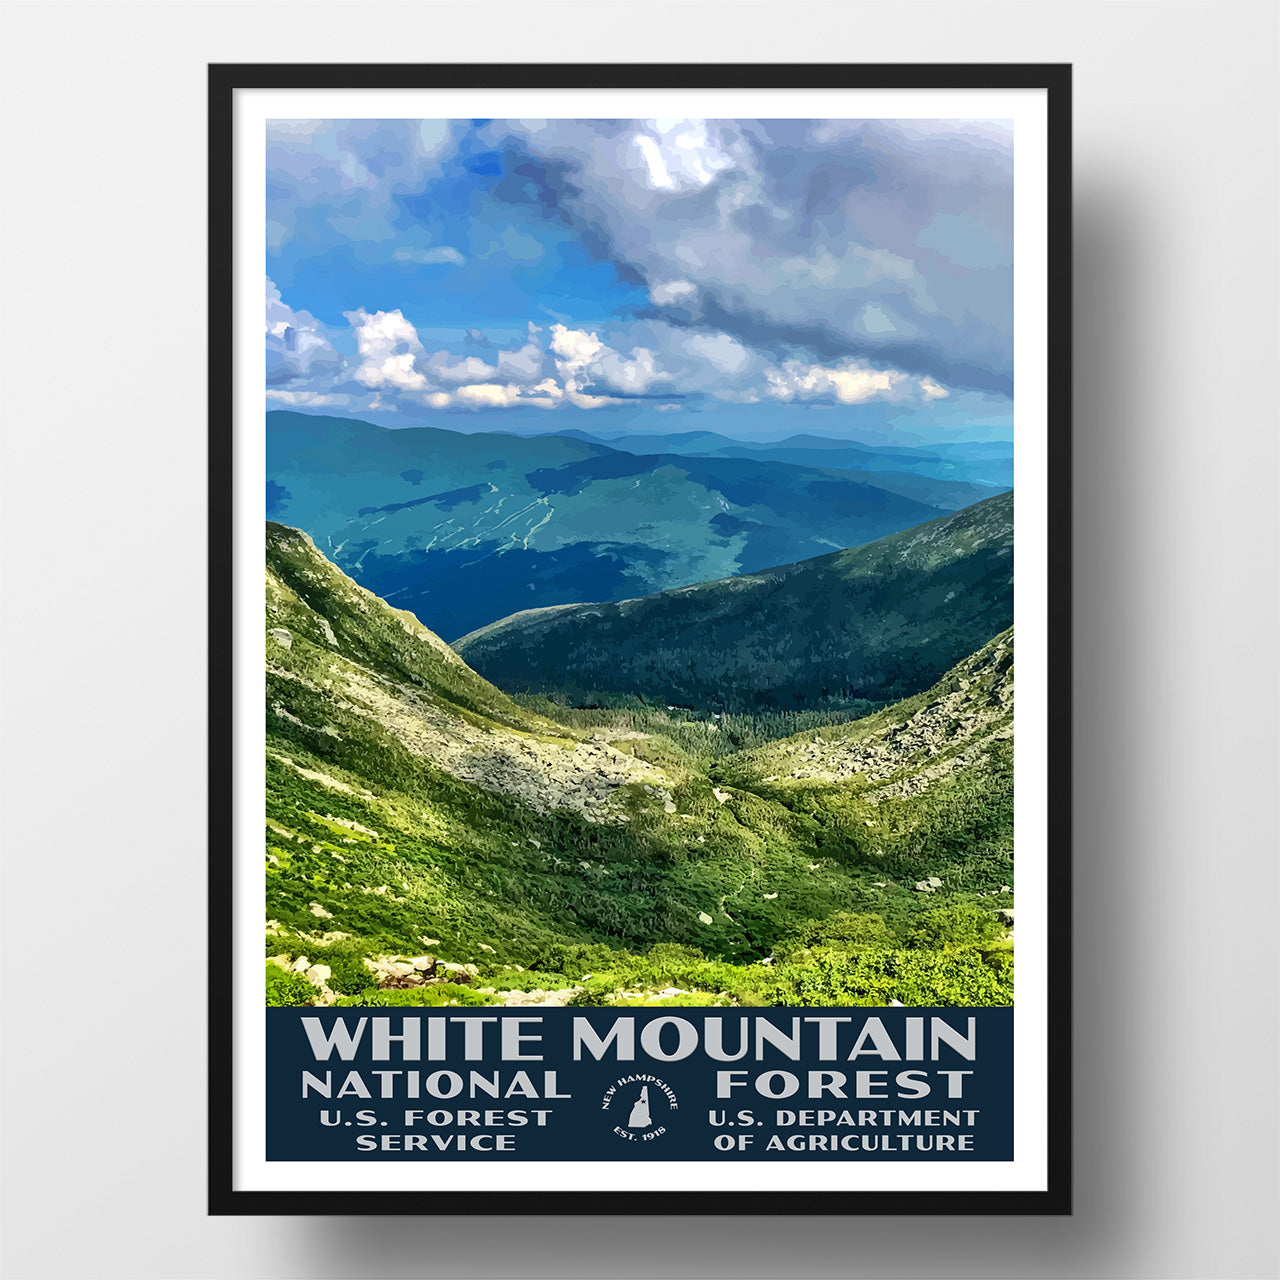 White Mountain National Forest Poster - WPA (Tuckermans Ravine)